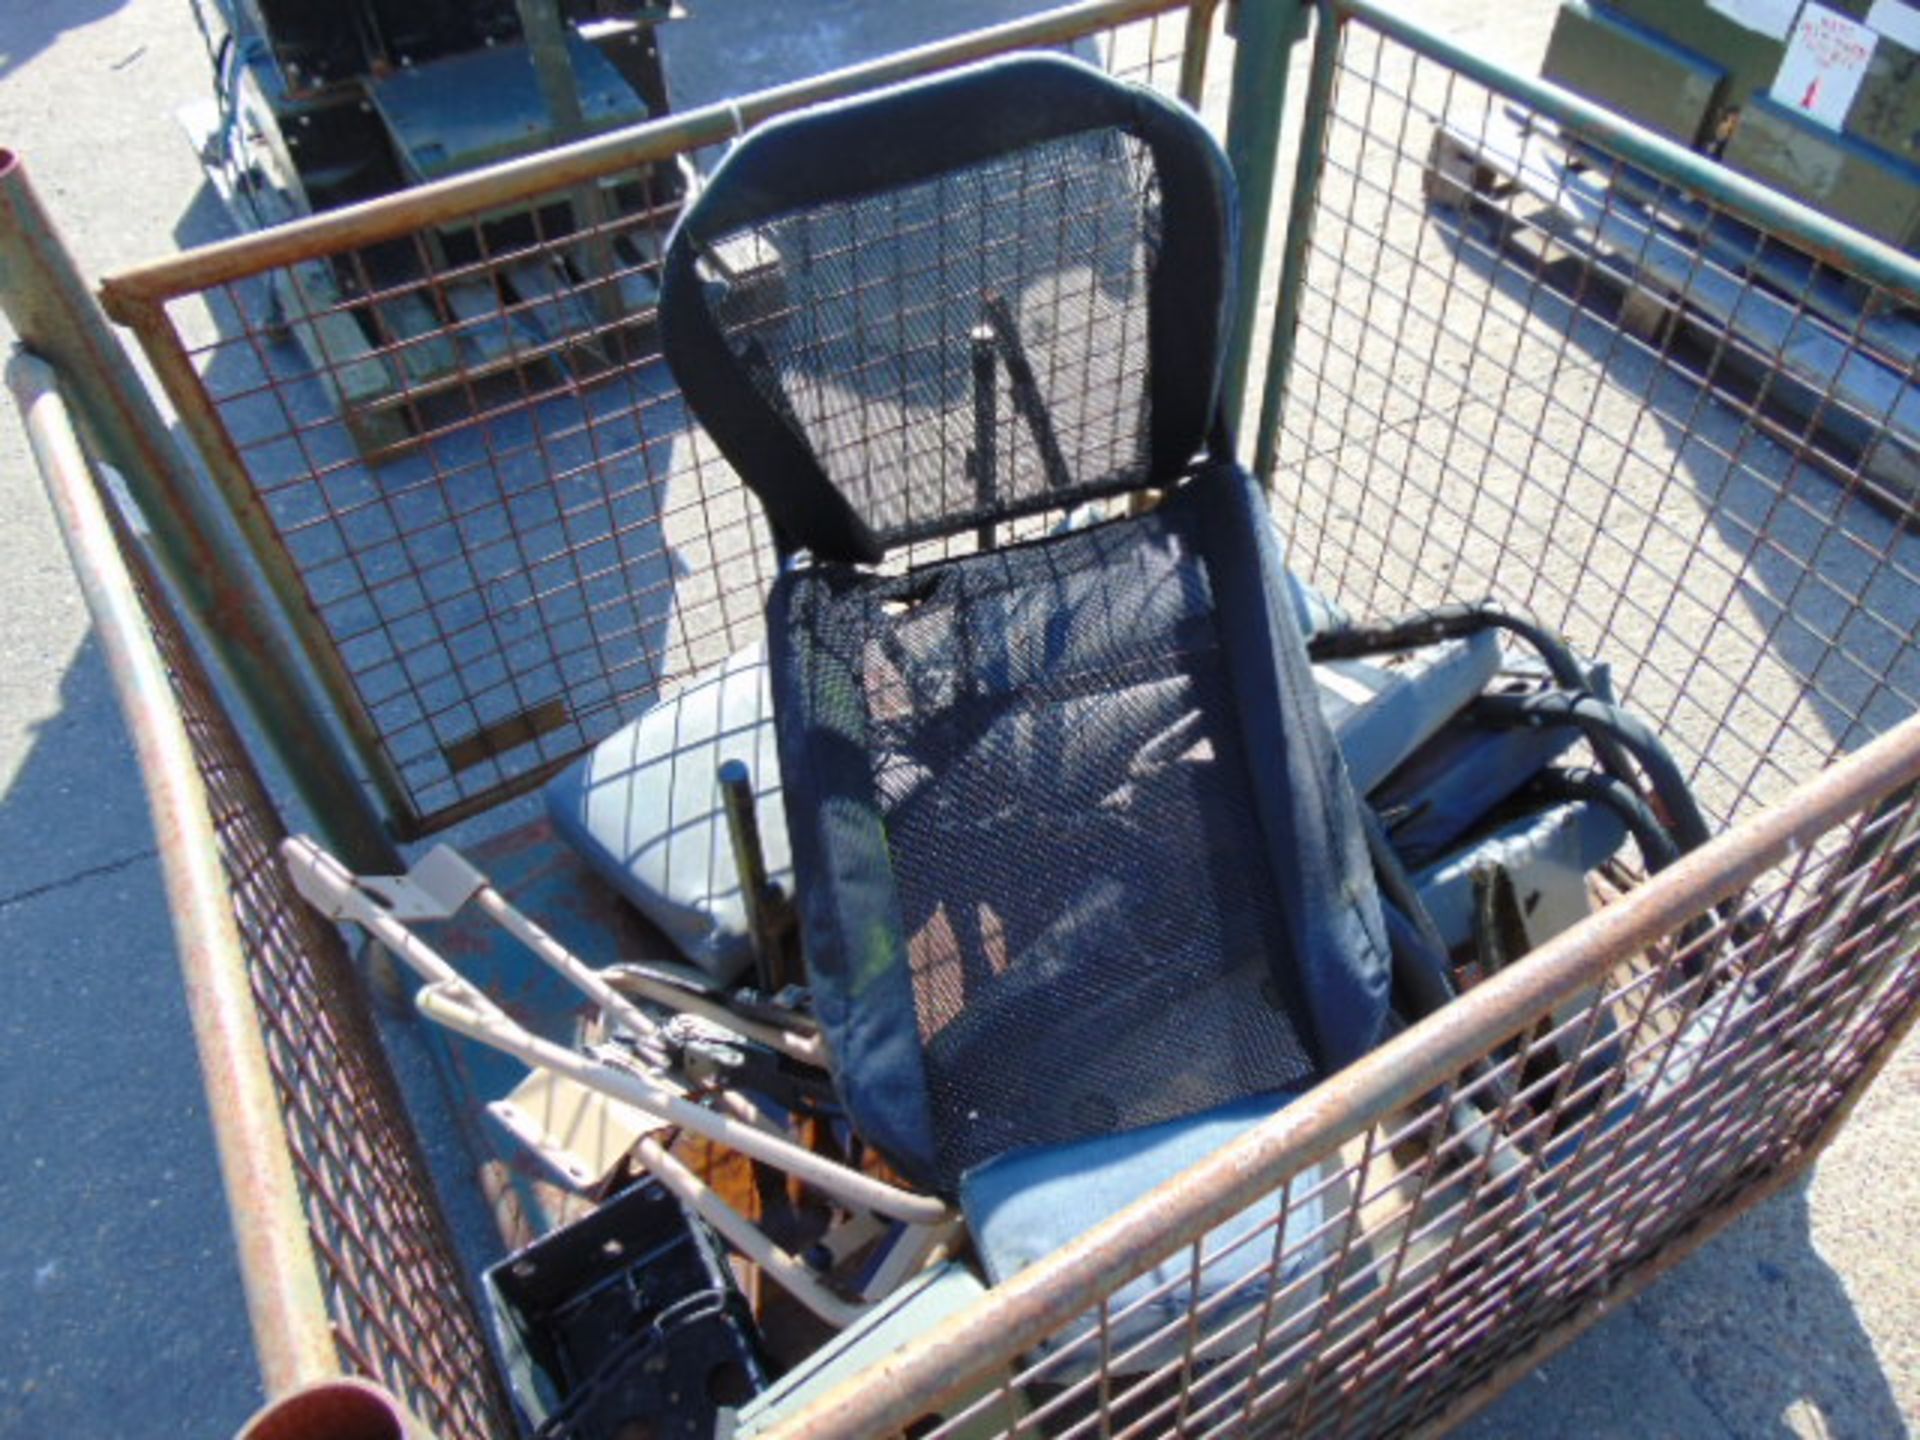 Mixed Operators / Jump Seats and a V Rare WMIK Seat as shown